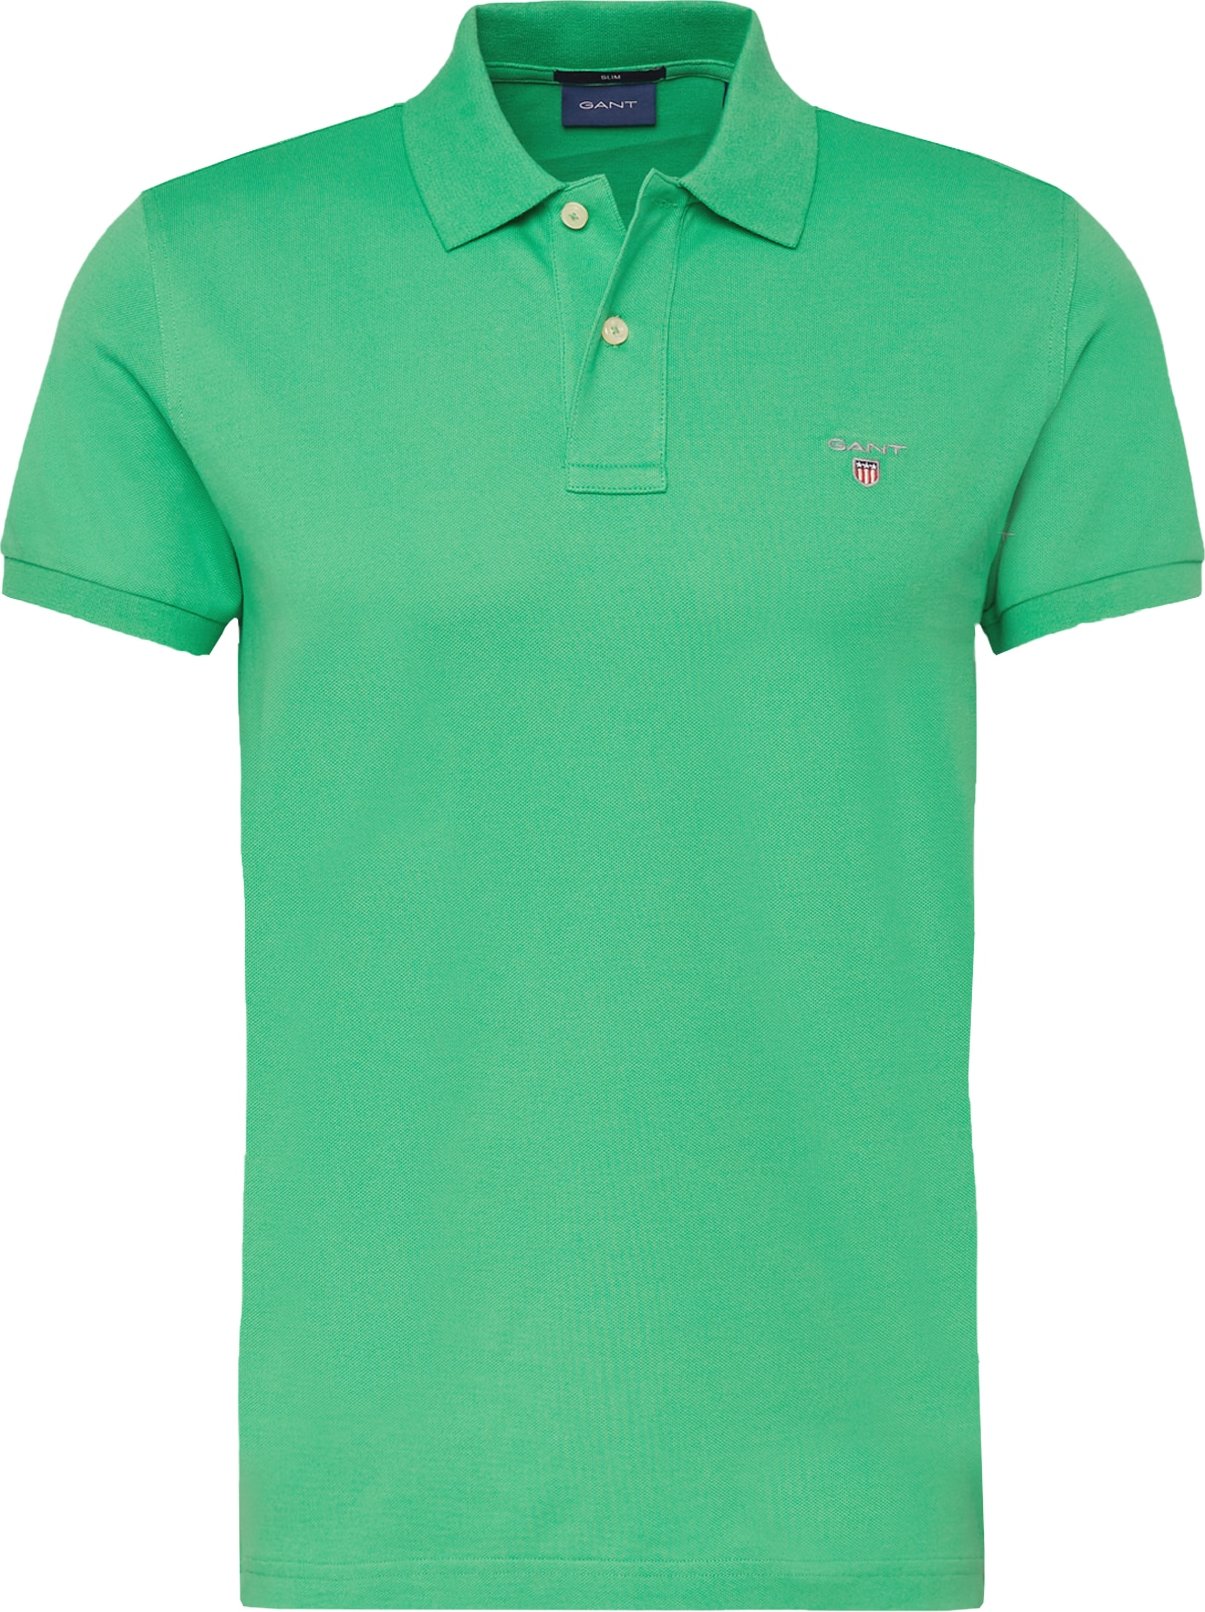 Tričko Gant zelená